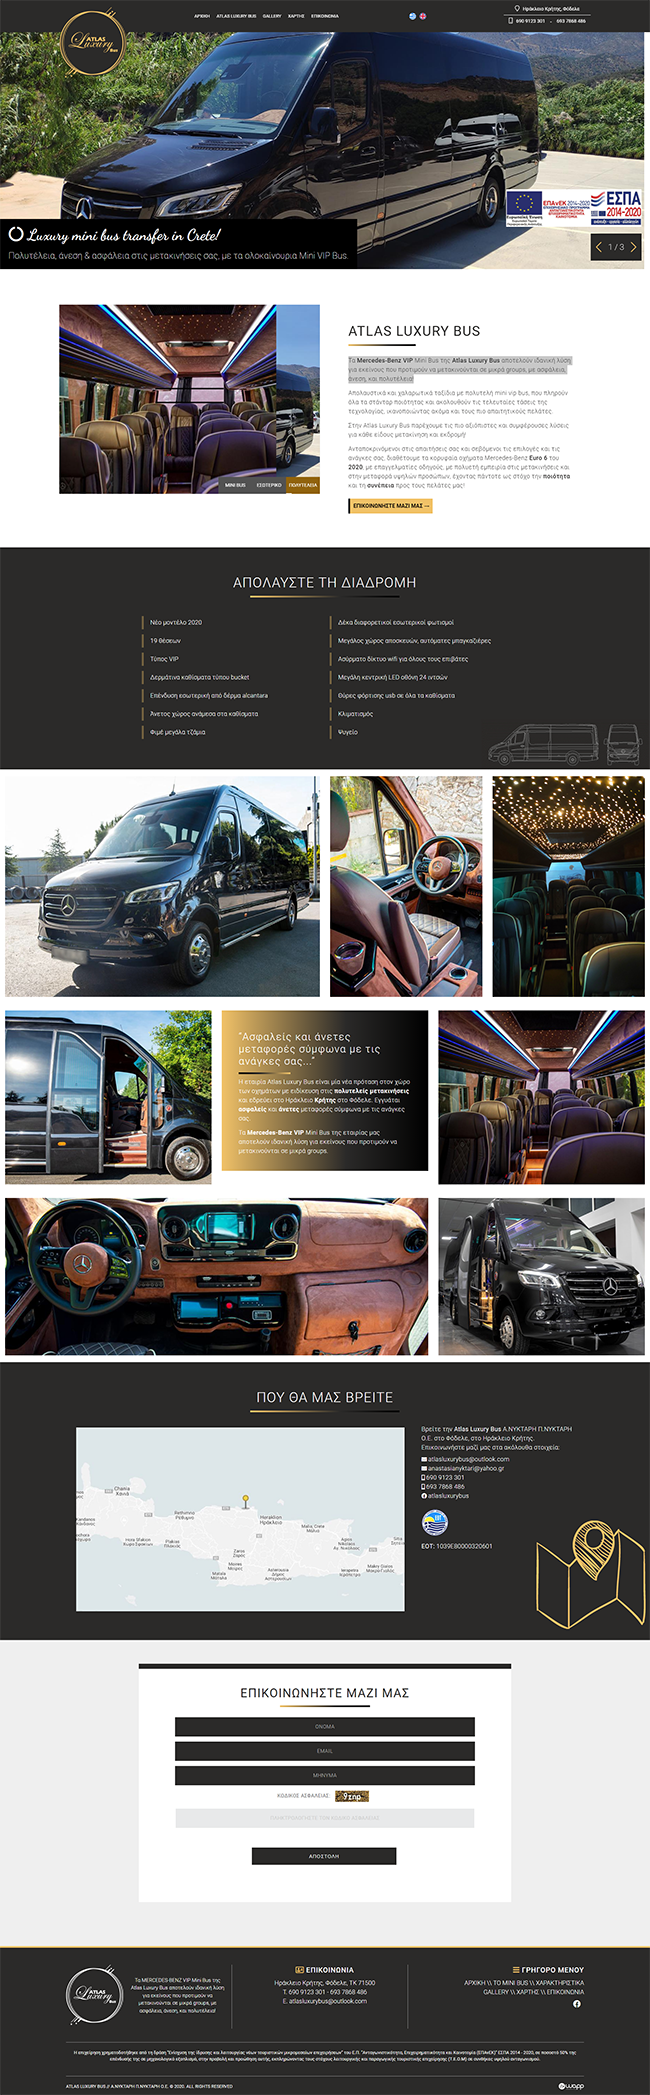 Responsive website for Atlas Luxury Bus in Crete